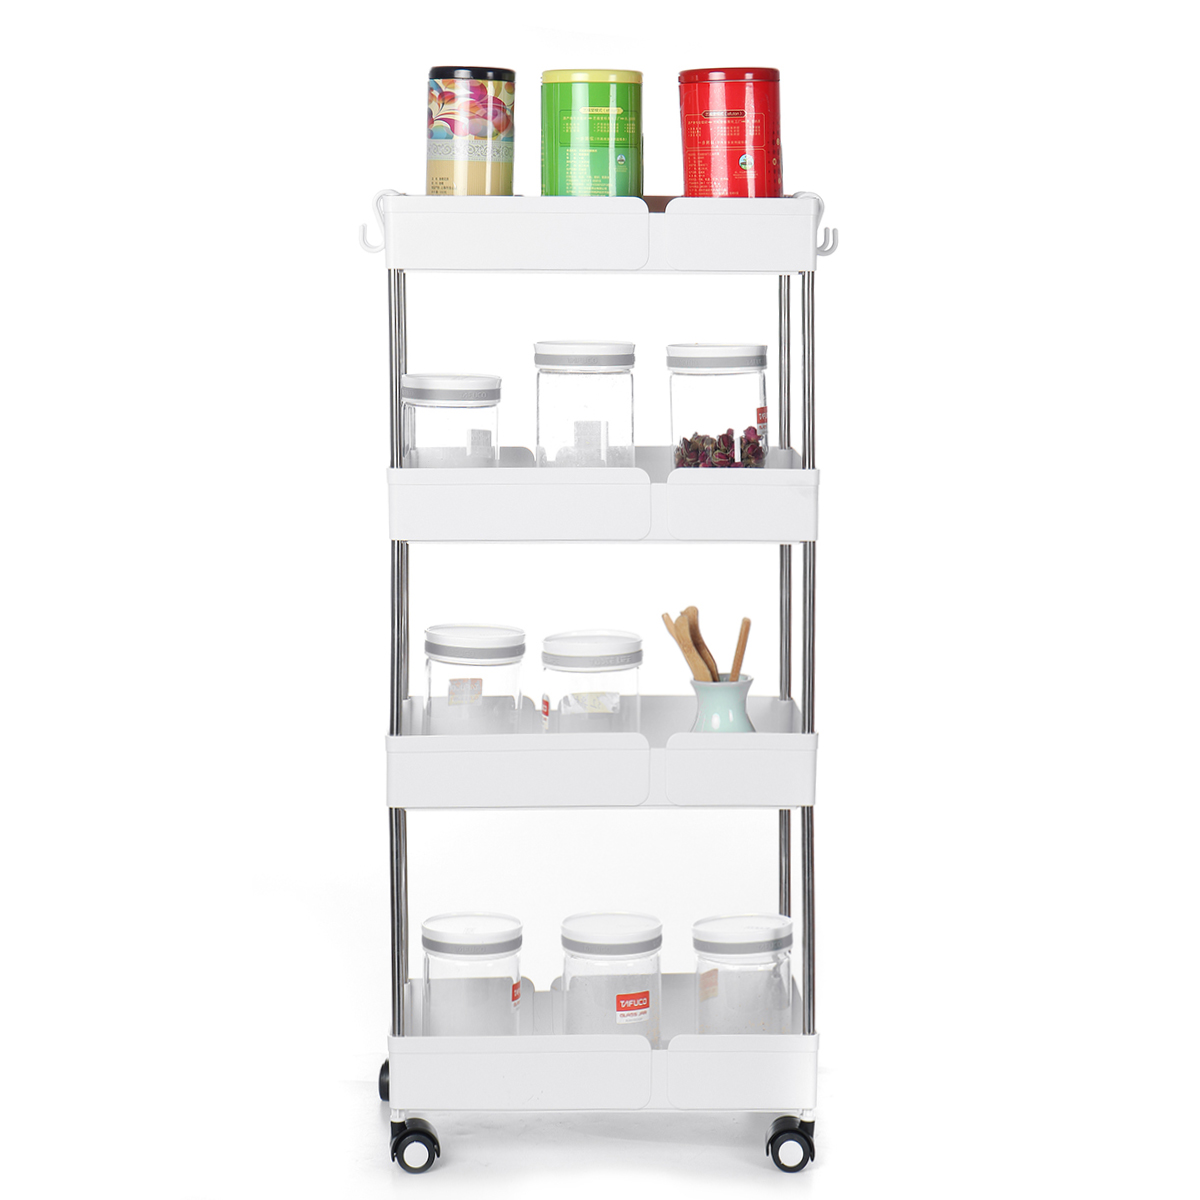 234-Rolling-Trolley-Storage-Holder-Rack-Organiser-With-Wheels-For-Kitchen-Bathroom-Office-1827511-15